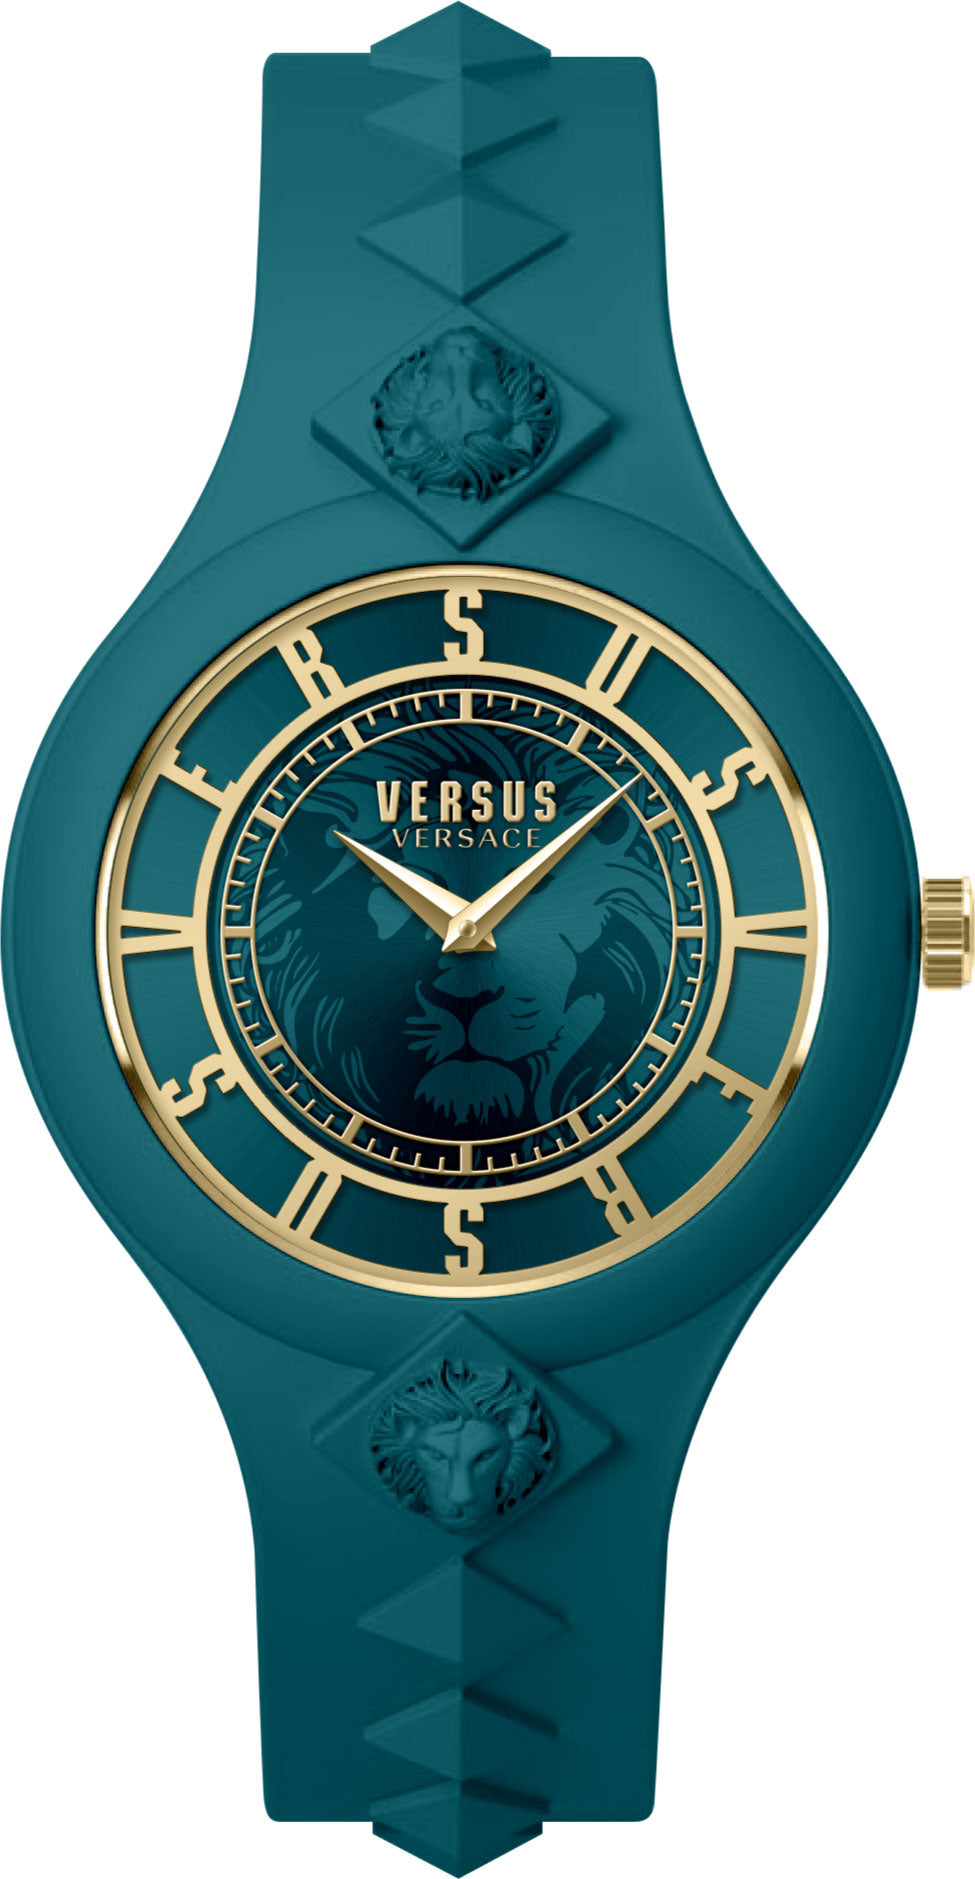 Versus Versace - Fire Island Studs Silicone Watch - Ruumur